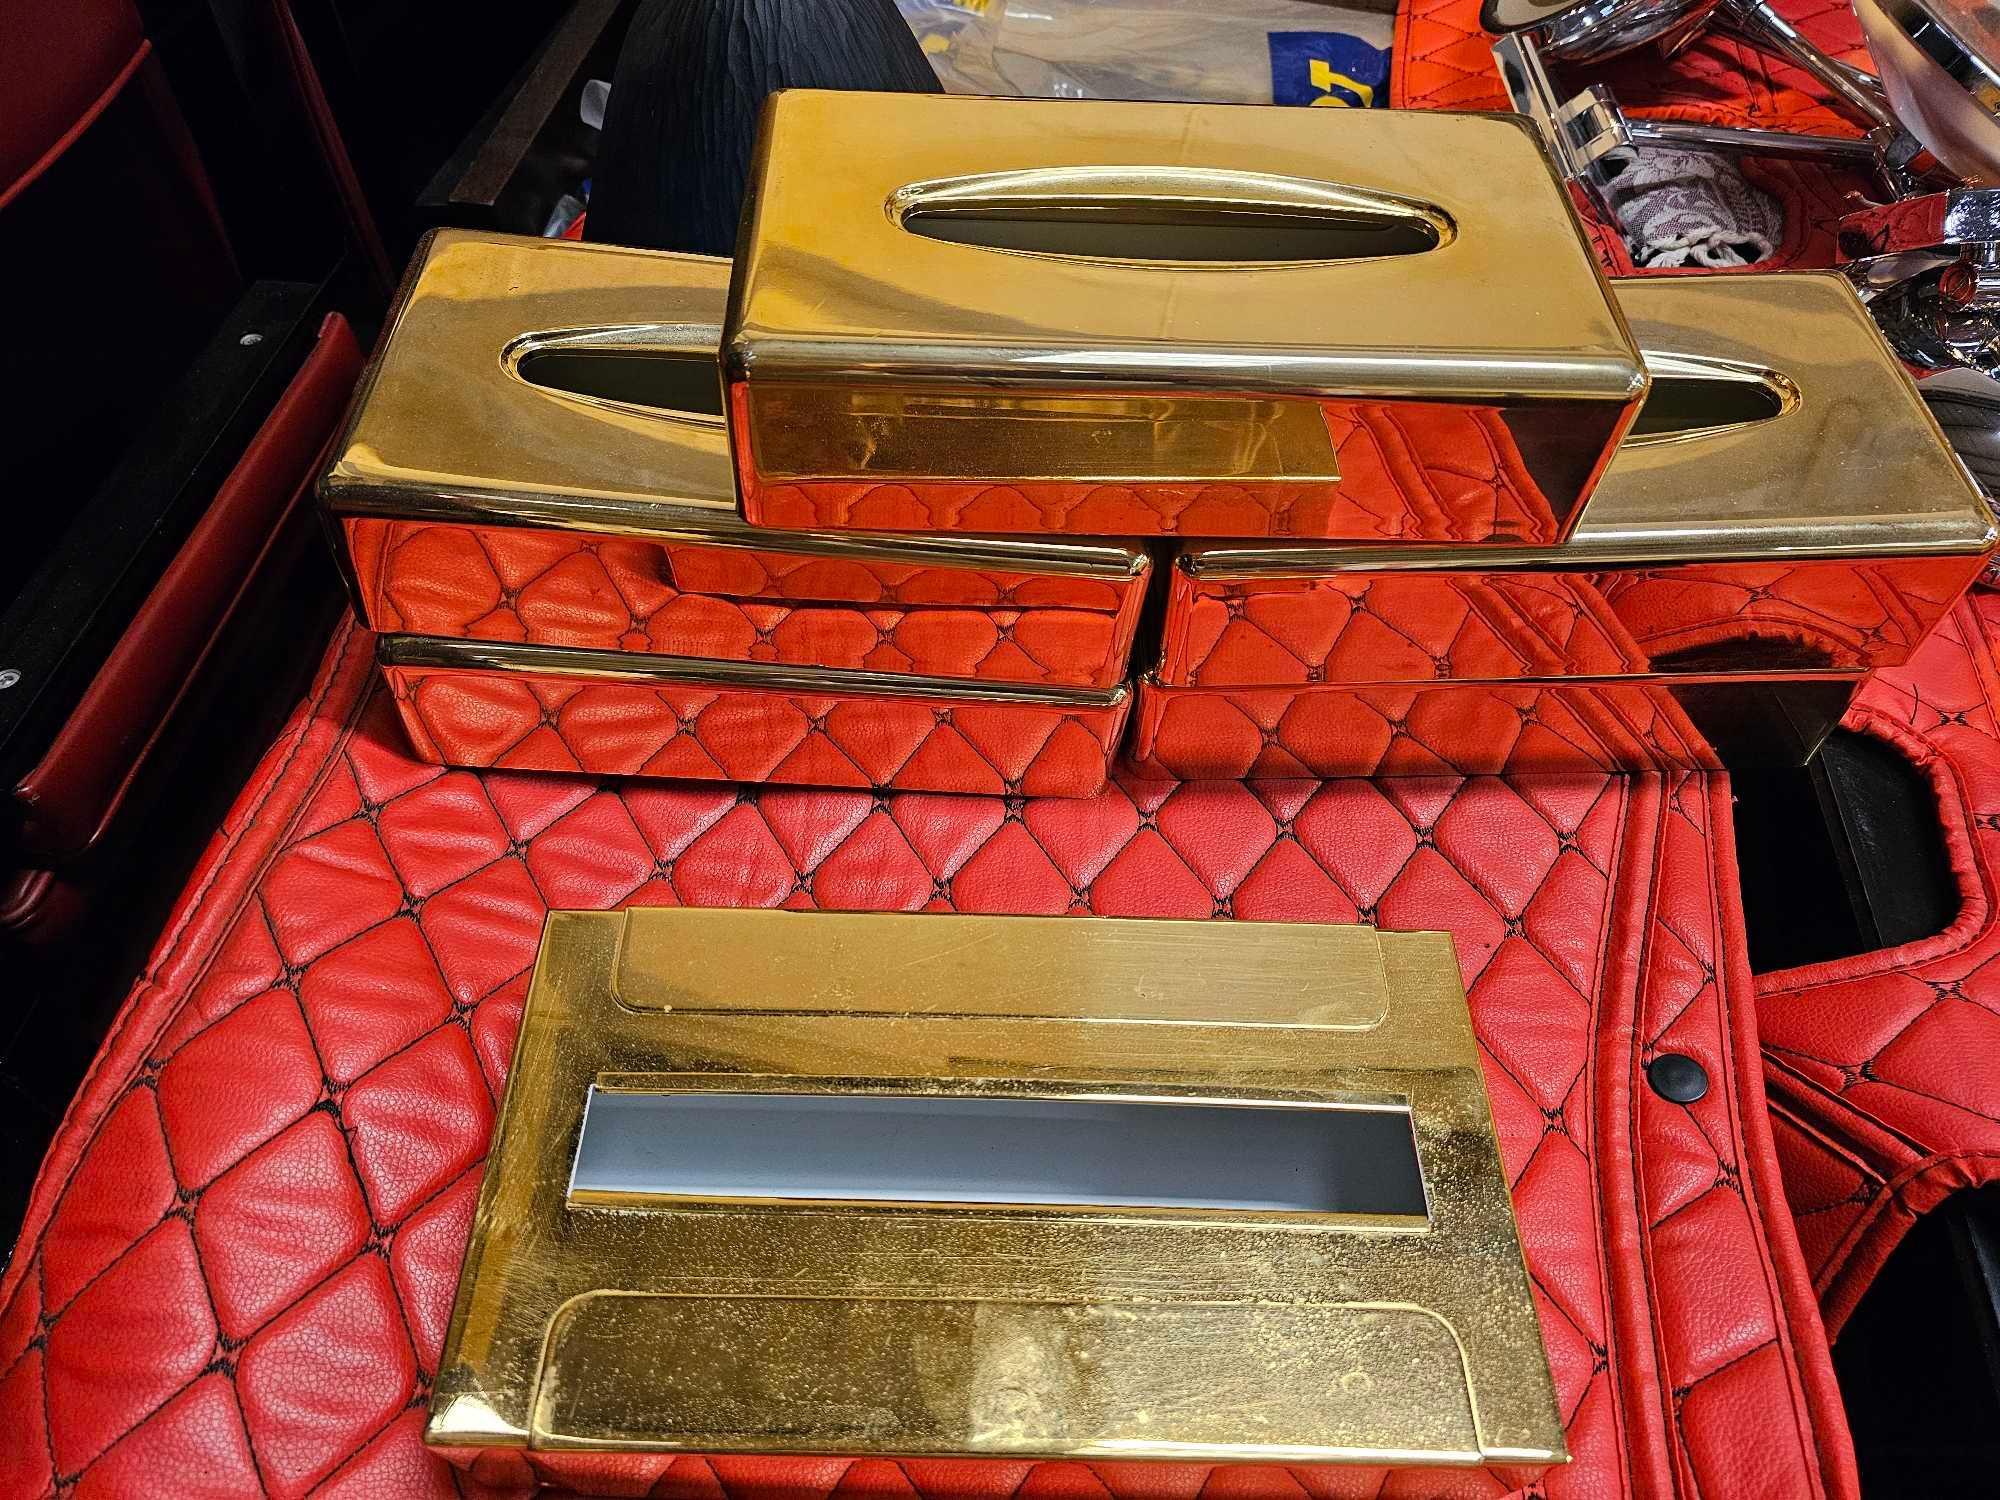 6 x Fdit Gold Stainless Steel Tissue Box, Decorative Metal Tissue Holder Cover Napkin Dispenser